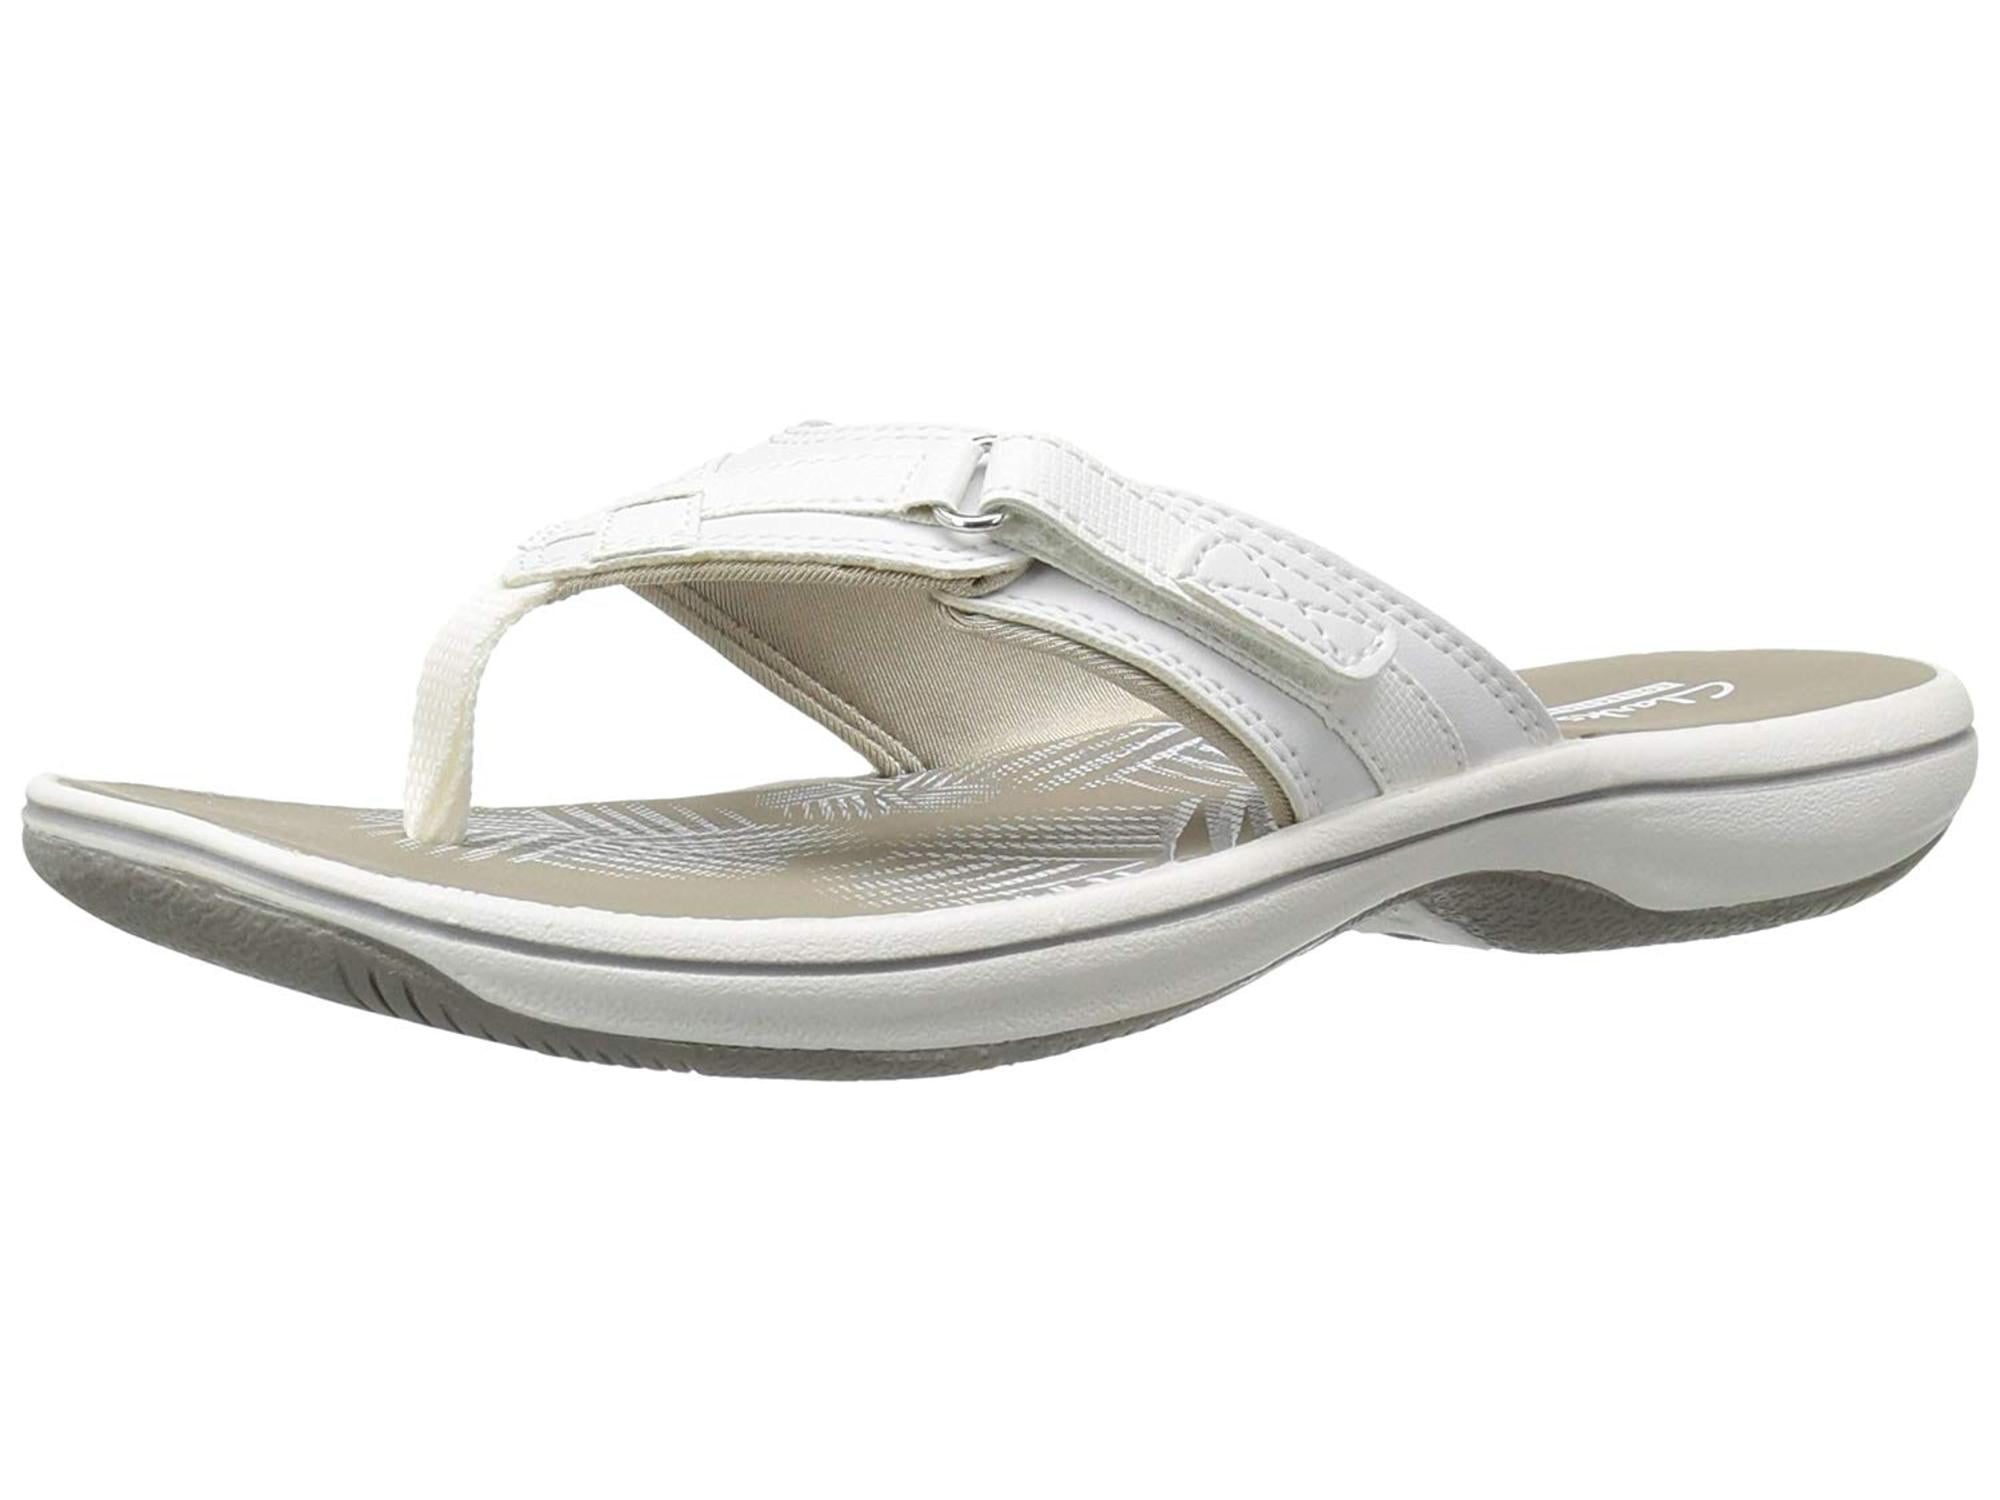 clarks sandals online canada